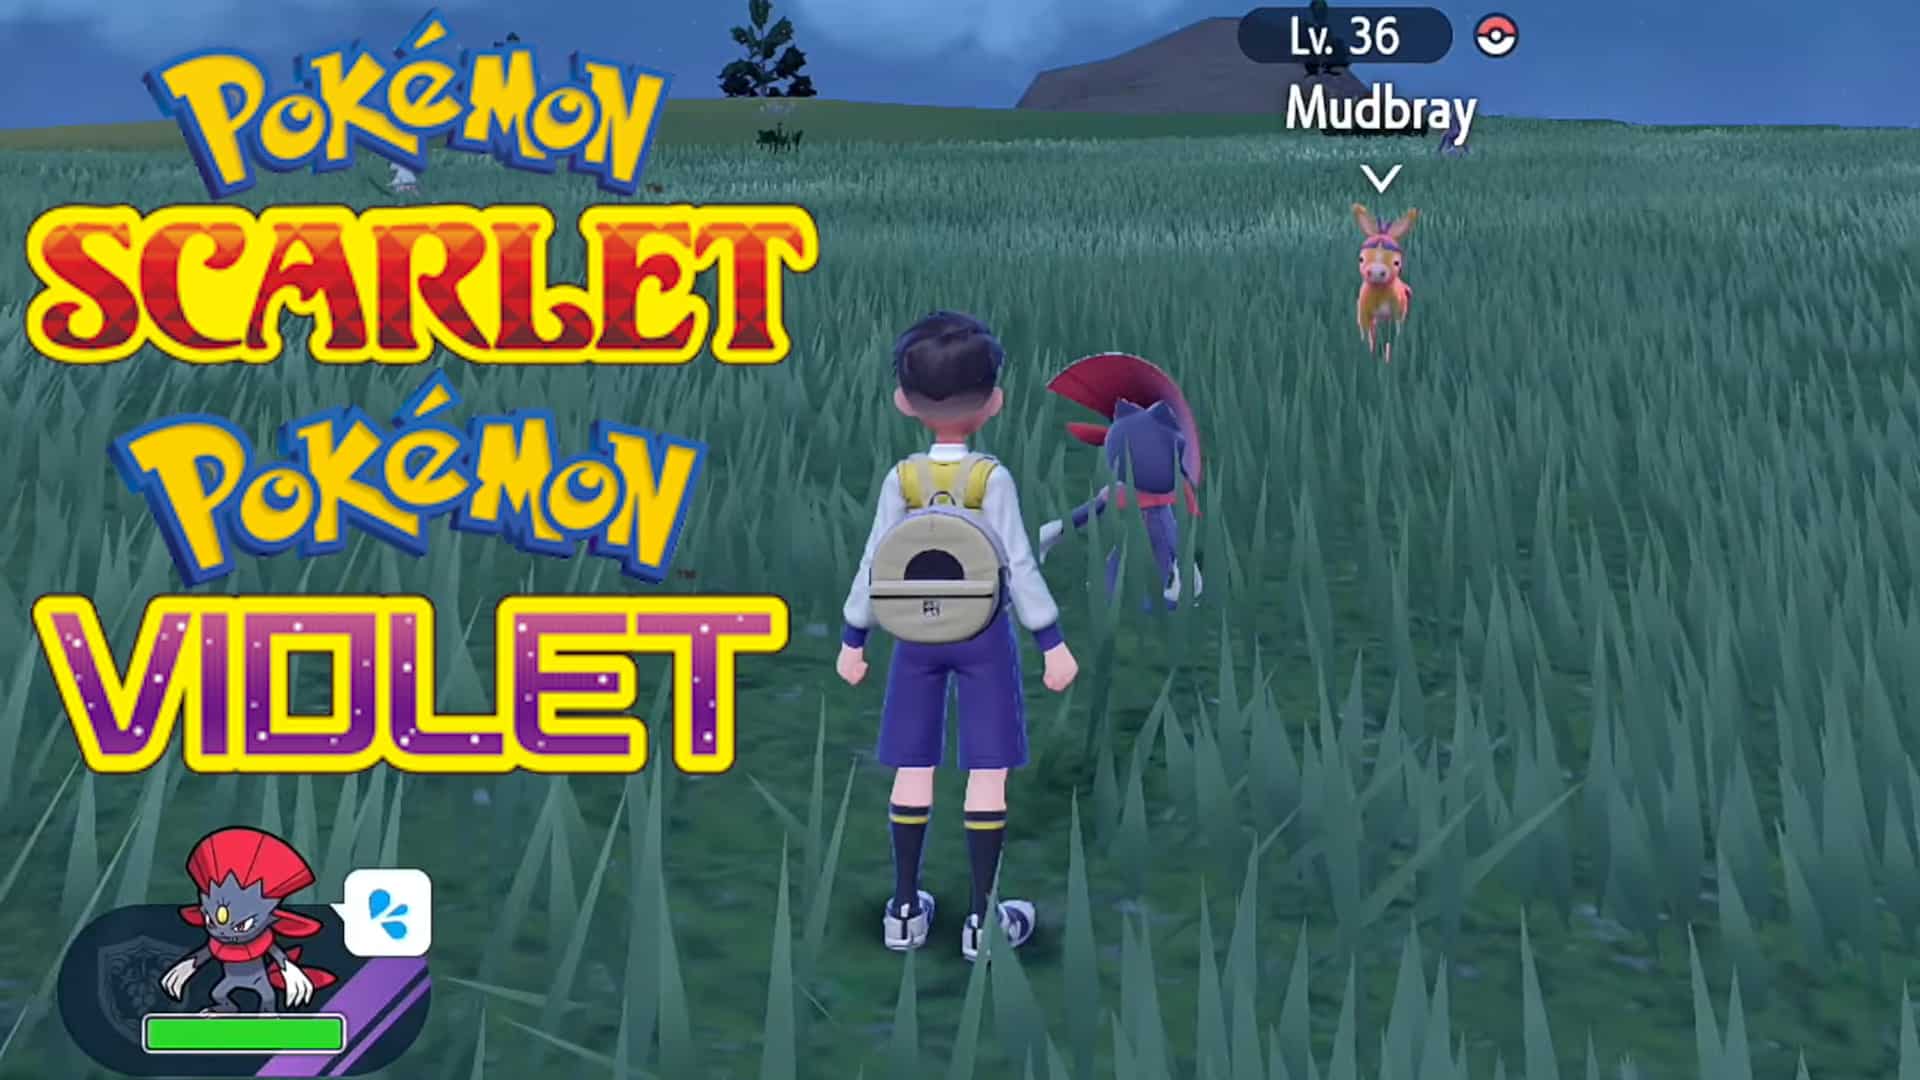 Shiny Pokemon For Offers - Scarlet / Violet: OPEN by Pokehunt on